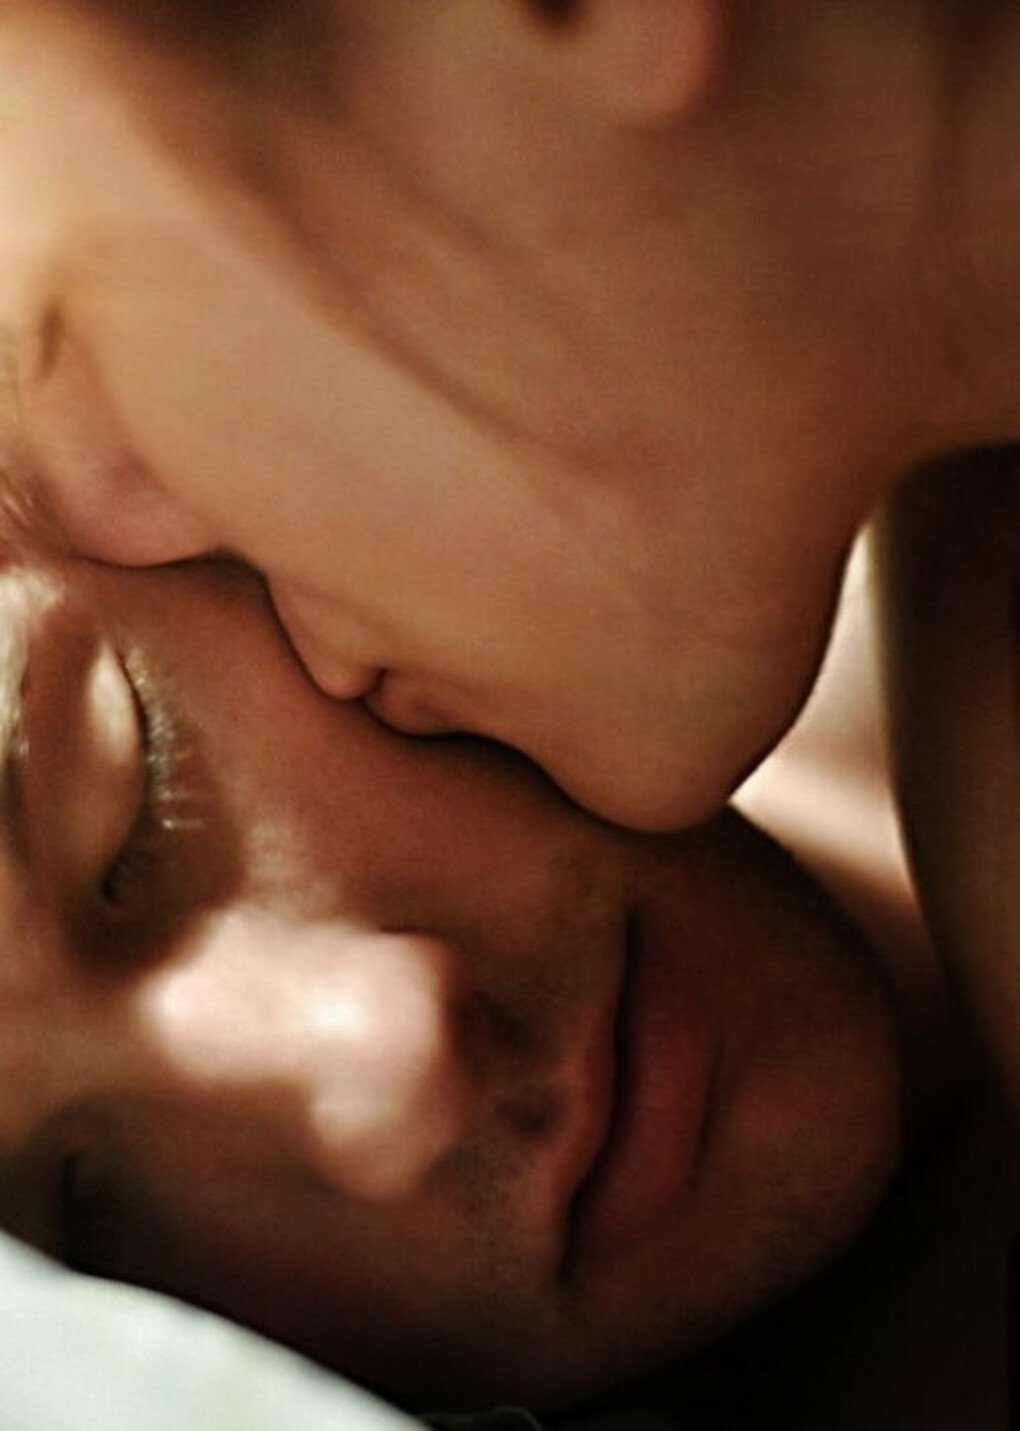 Утром целовать мужчину. Нежный поцелуй. Утренний поцелуй. Страстный поцелуй. Нежный мужчина.